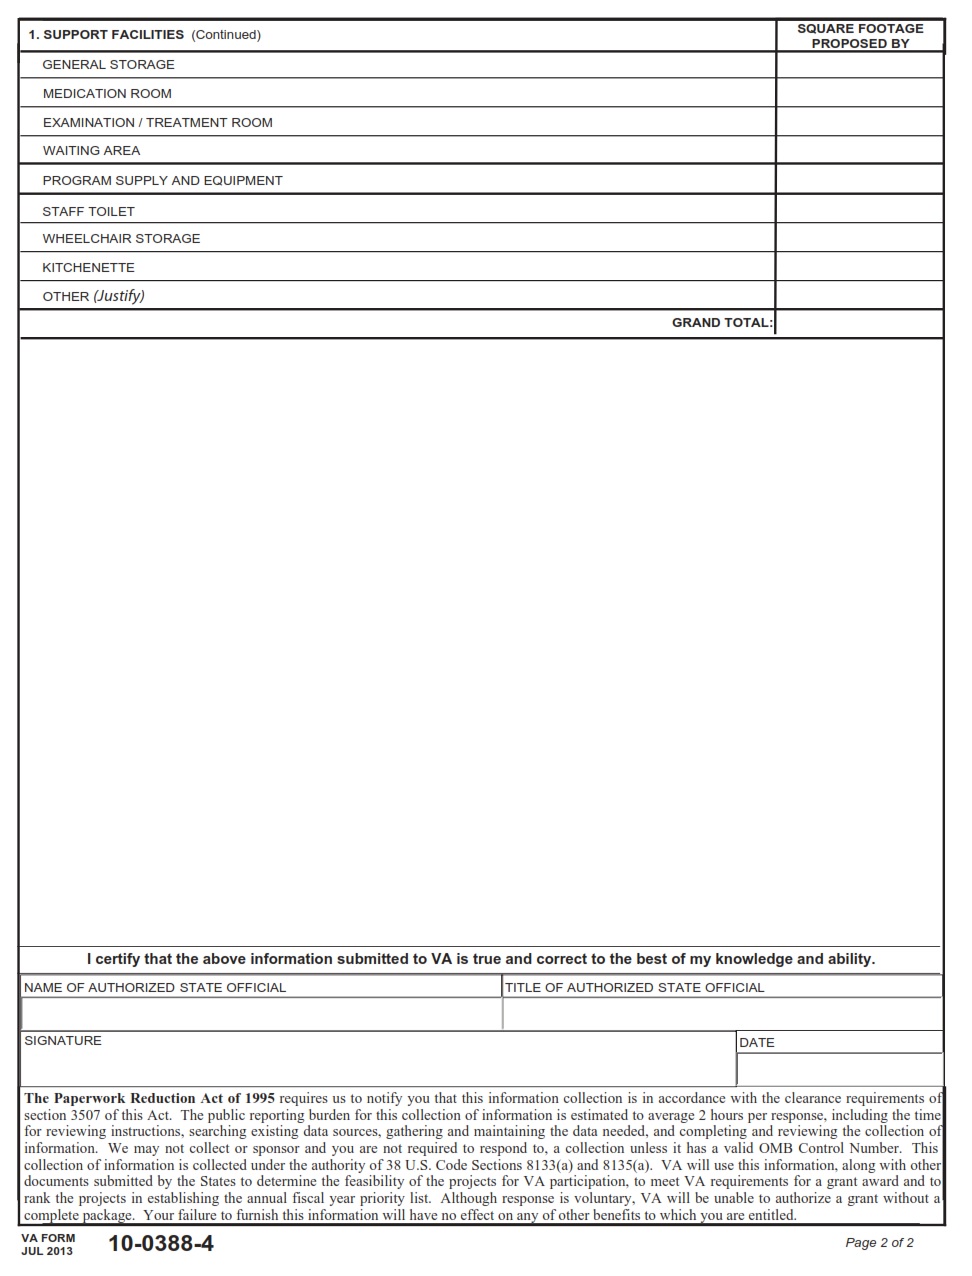 VA Form 10-0388-4 - Page 2